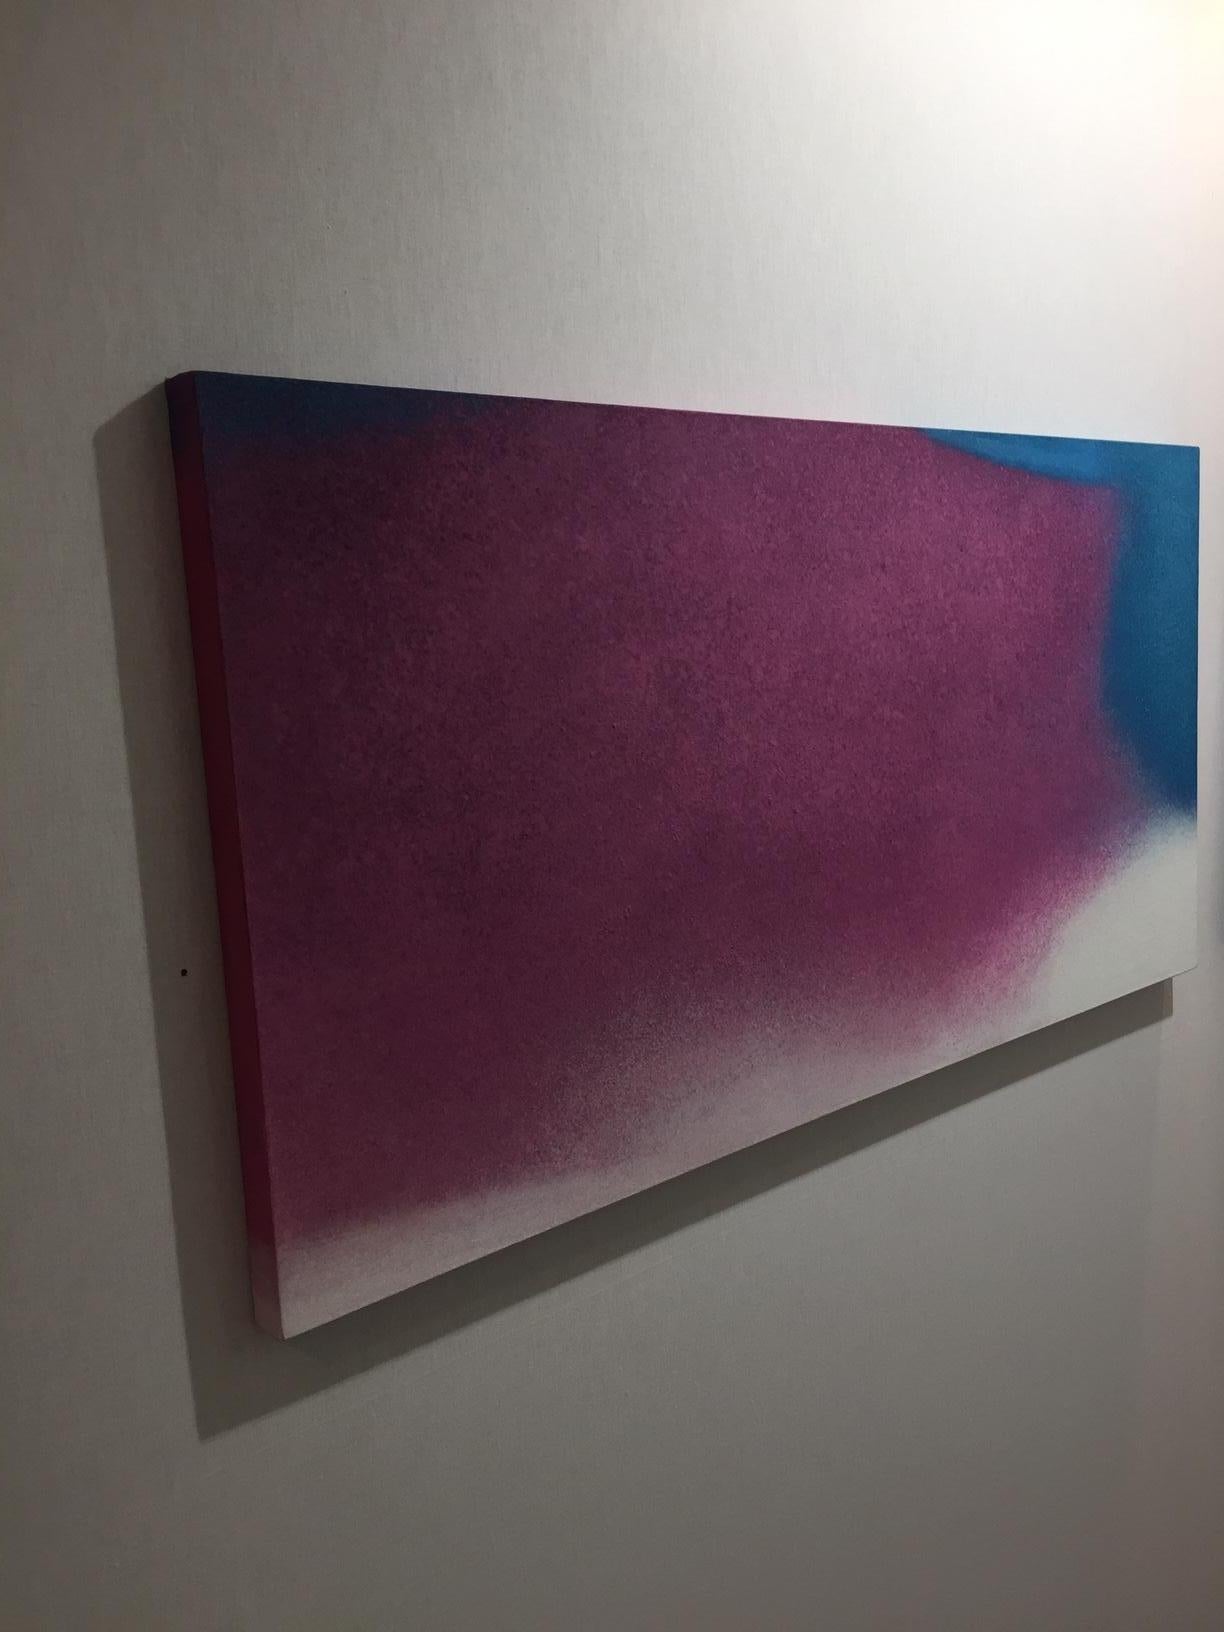 Japanese Contemporary Art by Fusako Ekuni - Into the Light For Sale 2